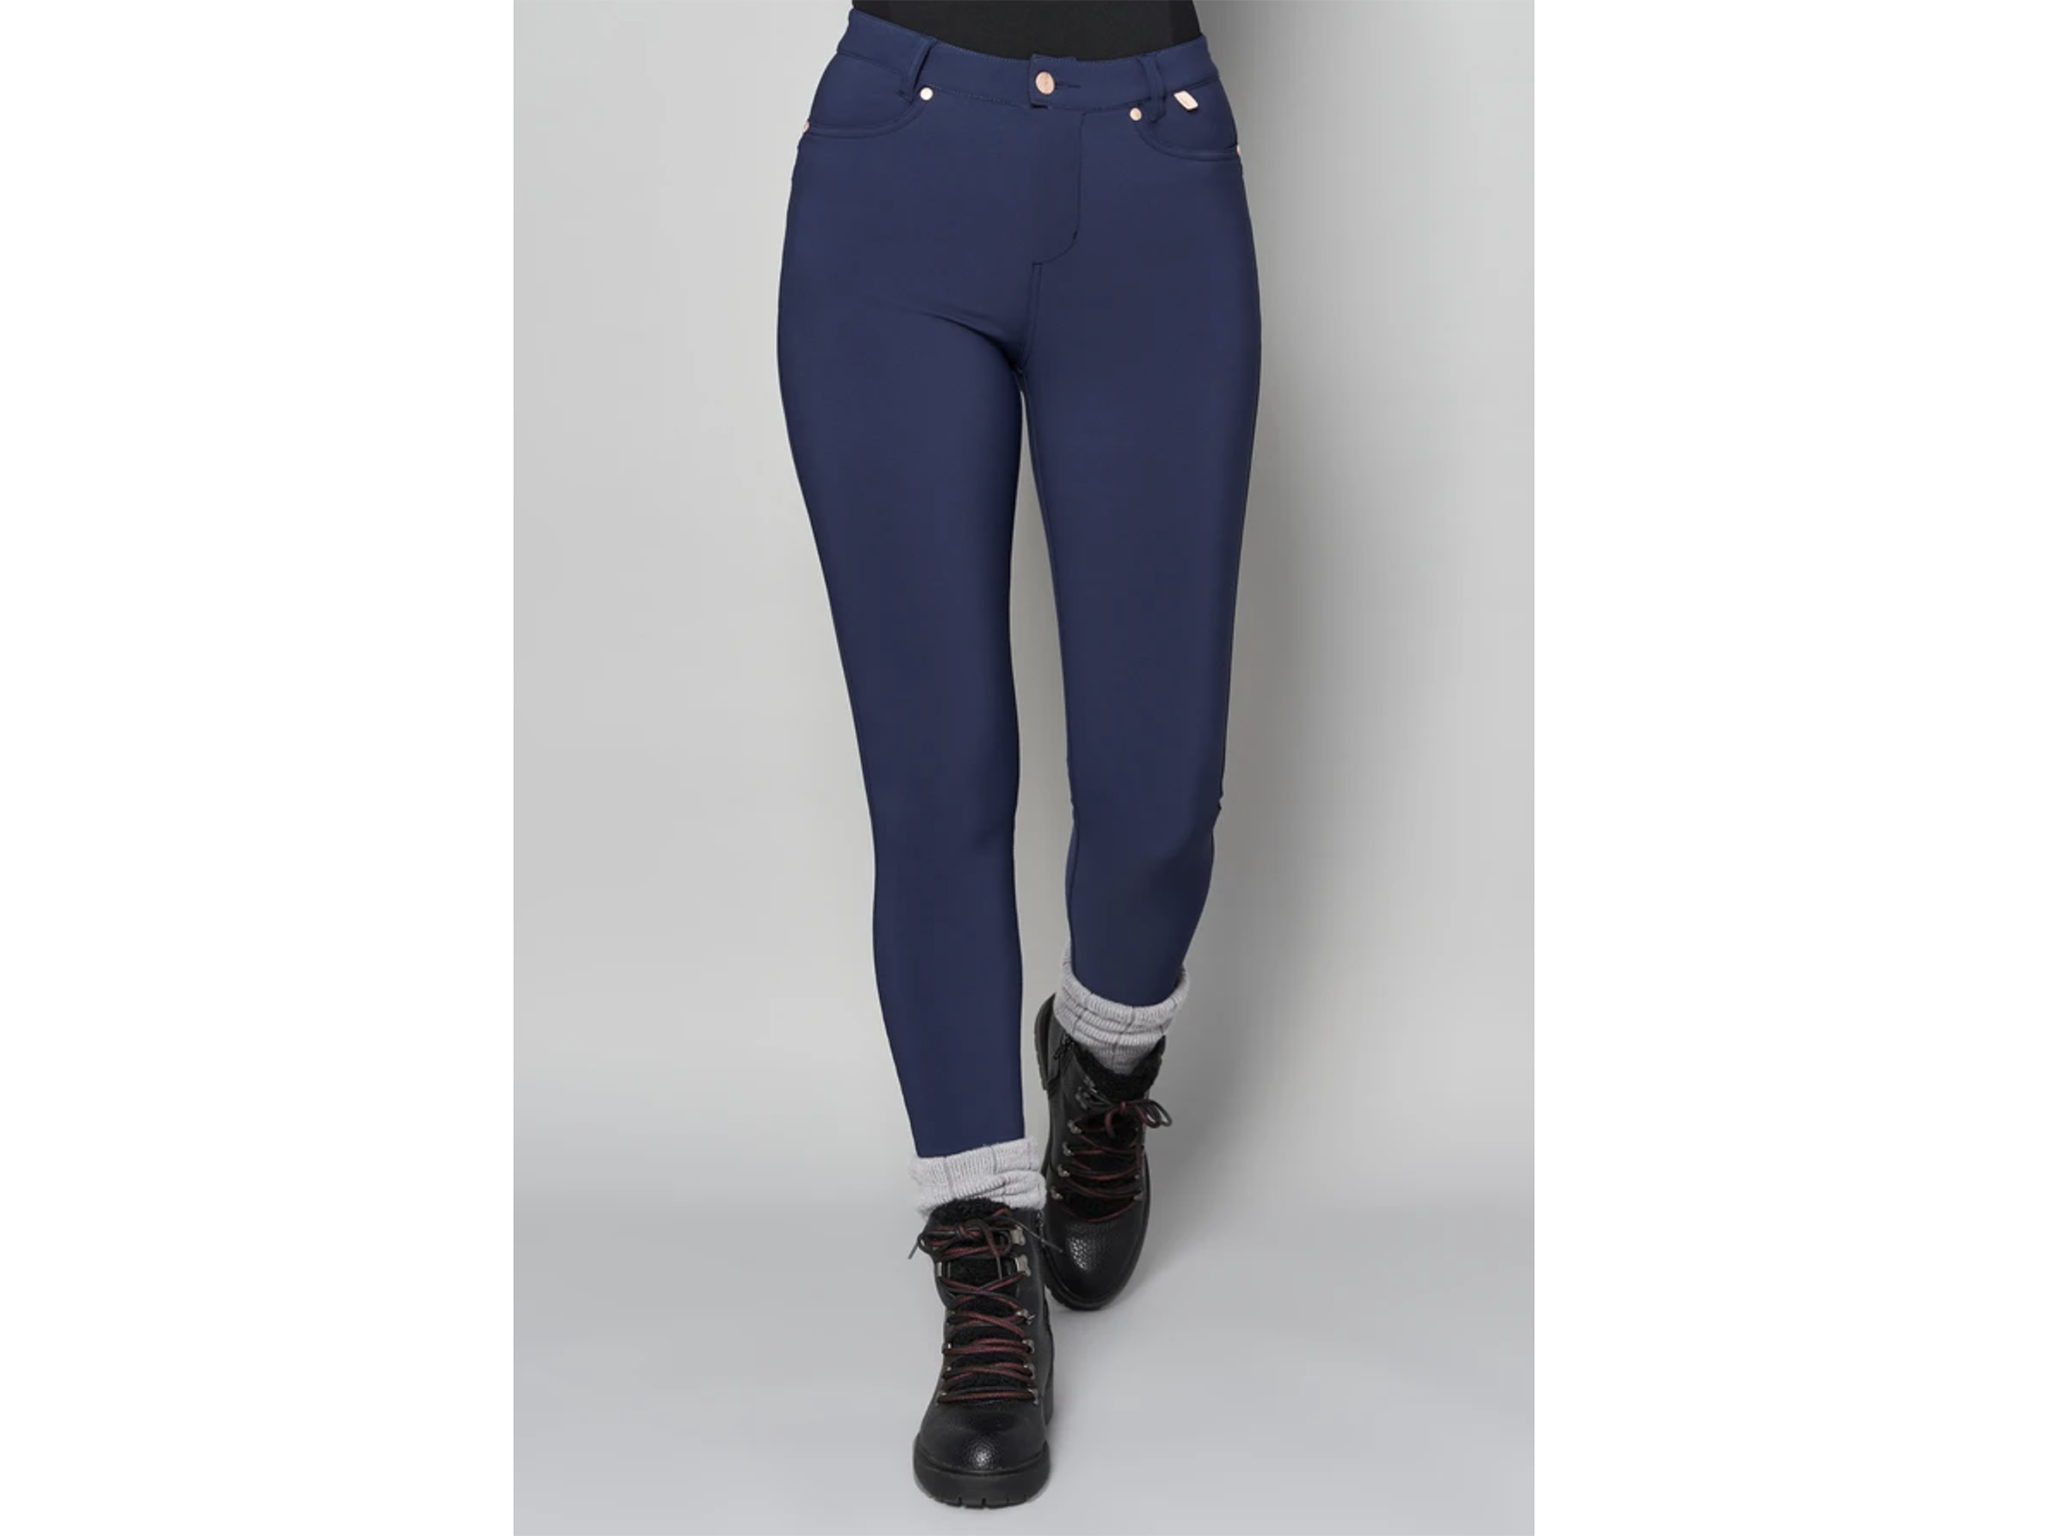 acai-outdoorwear-fleece-lined-jeans-indybest